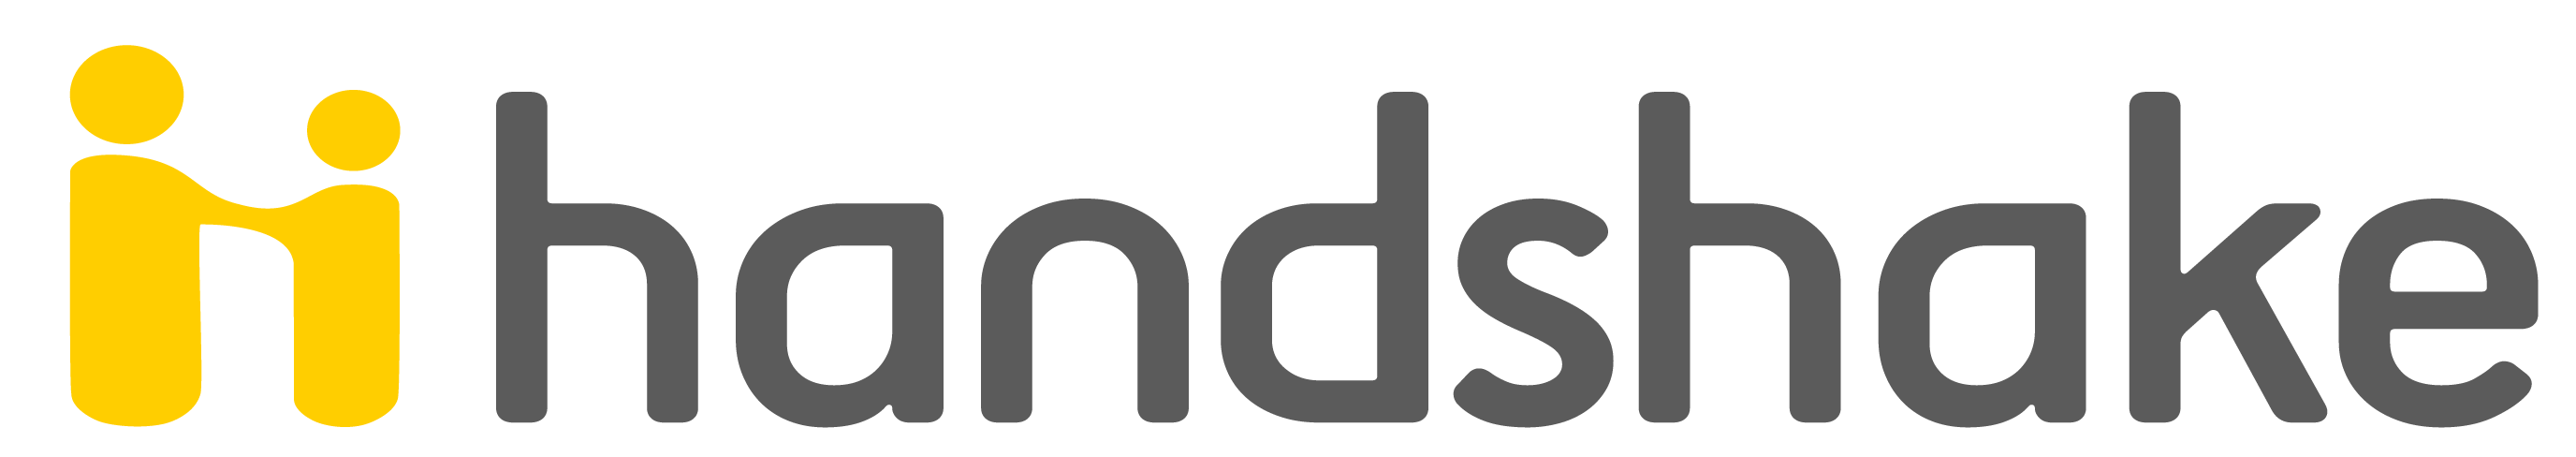 handshake logo dark